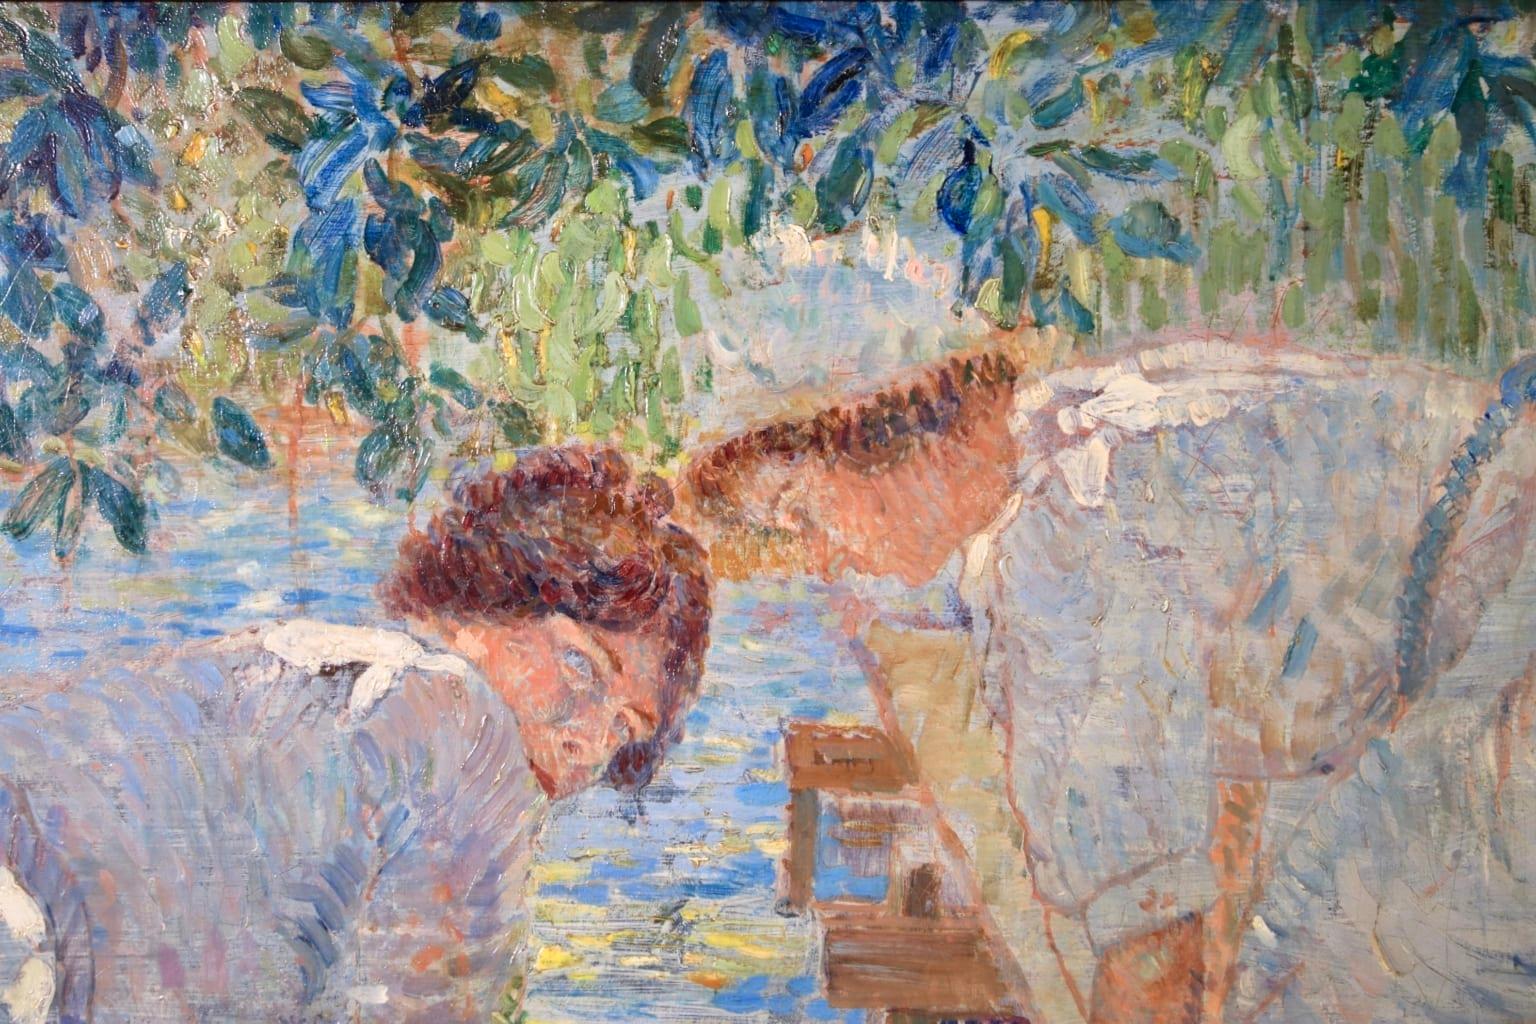 Lavandieres - Impressionist Oil, Women by River in Landscape by Paul Villiers 2